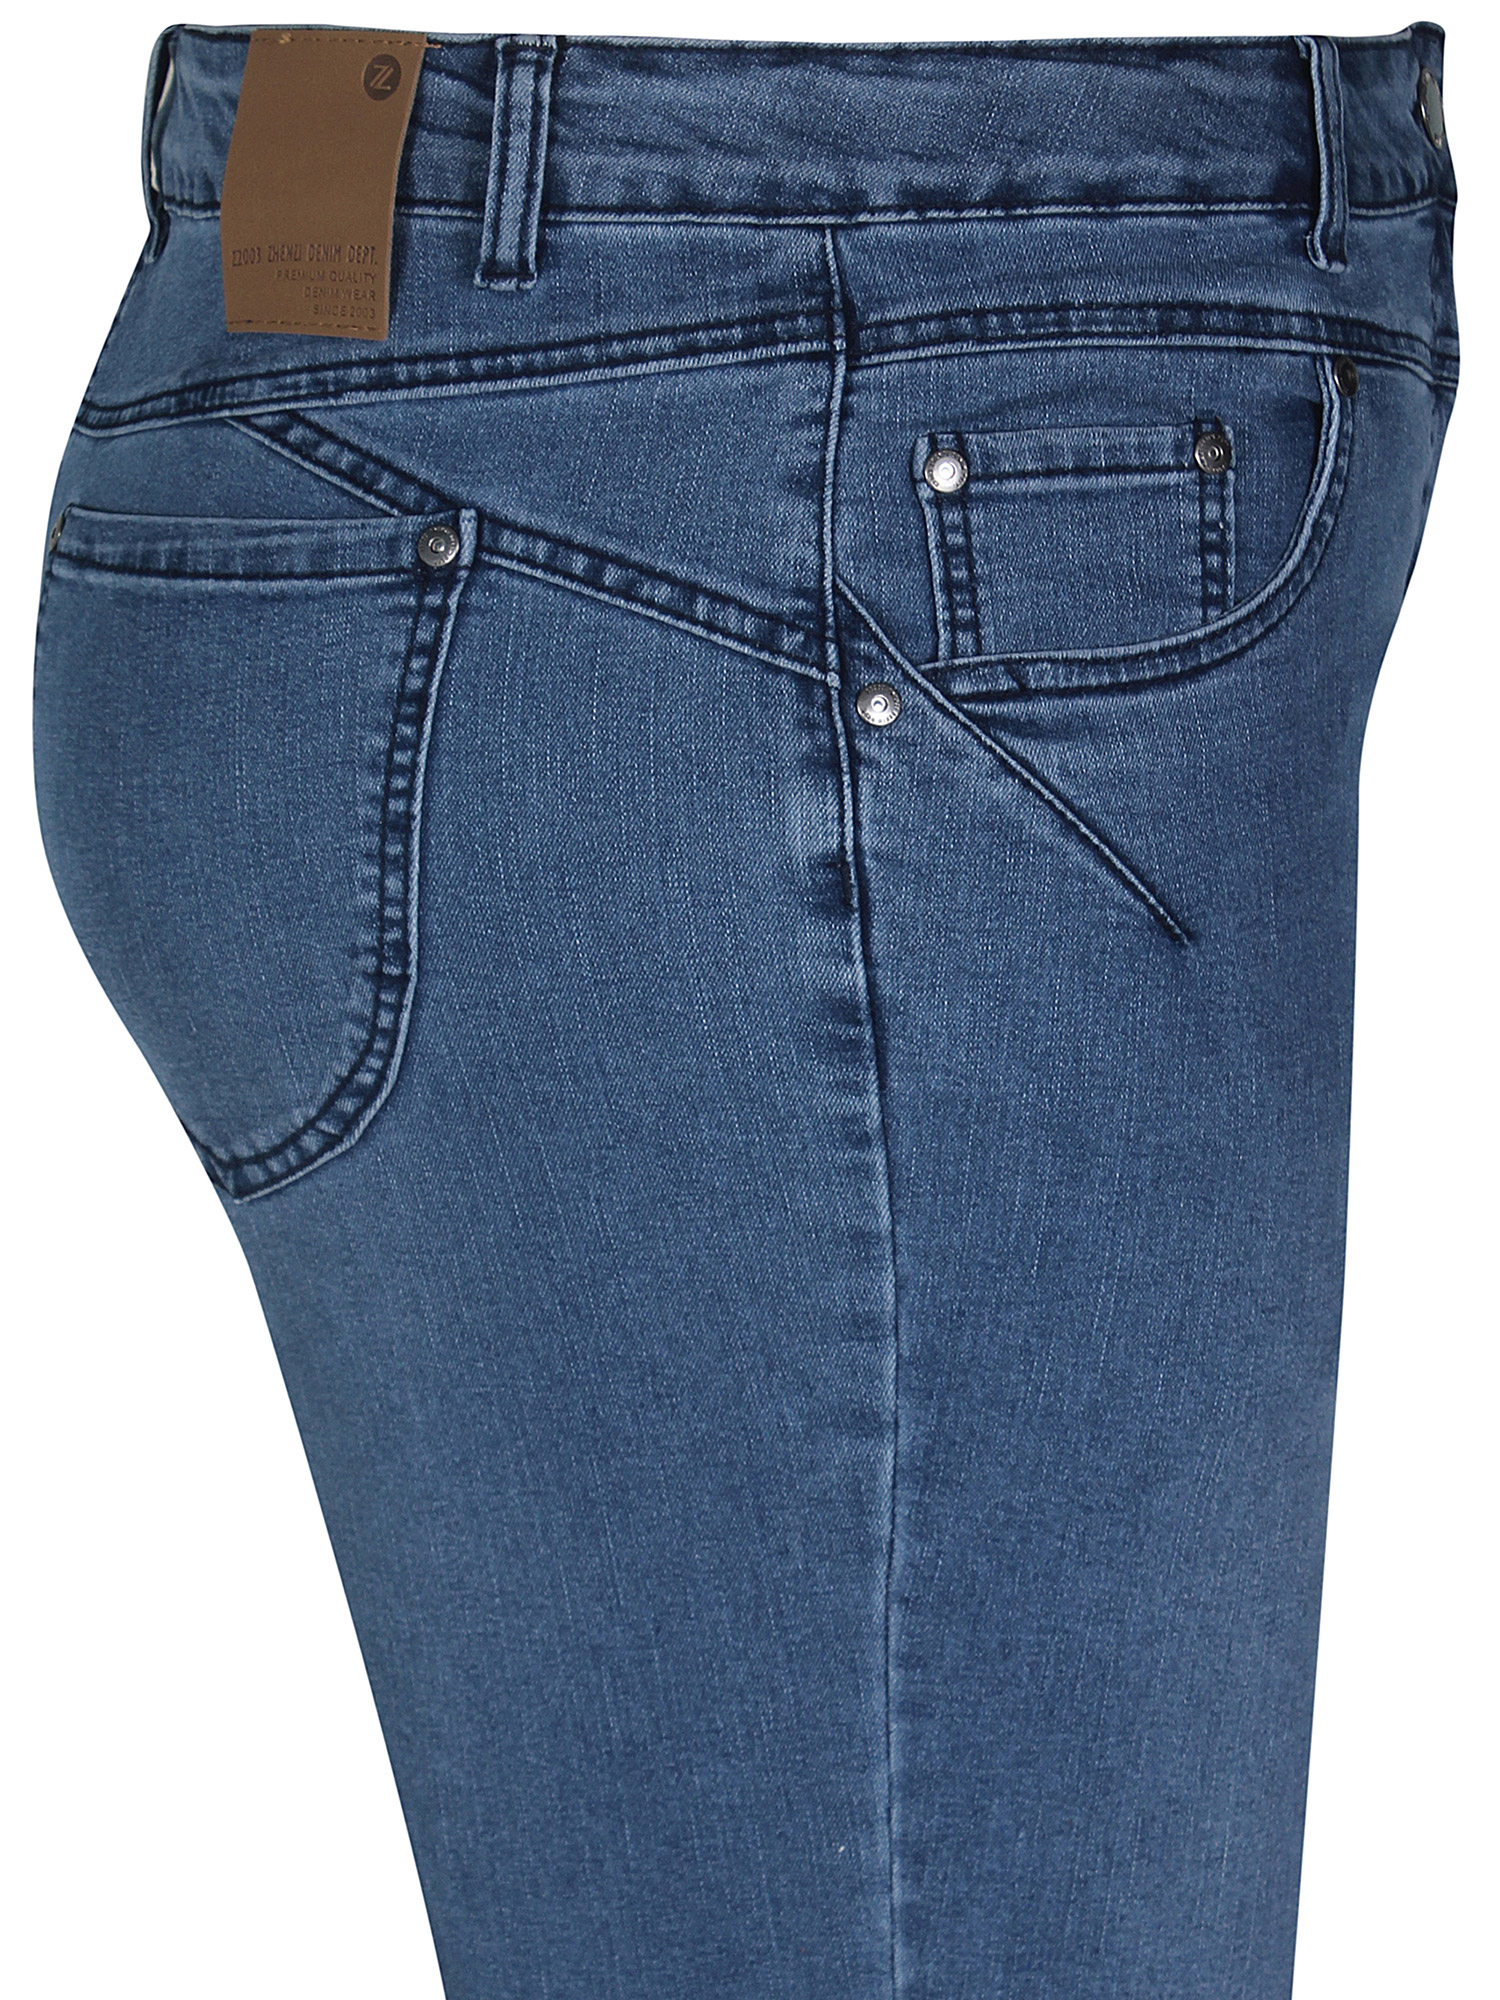 SALSA - Lækre strækbar blå jeans  fra Zhenzi